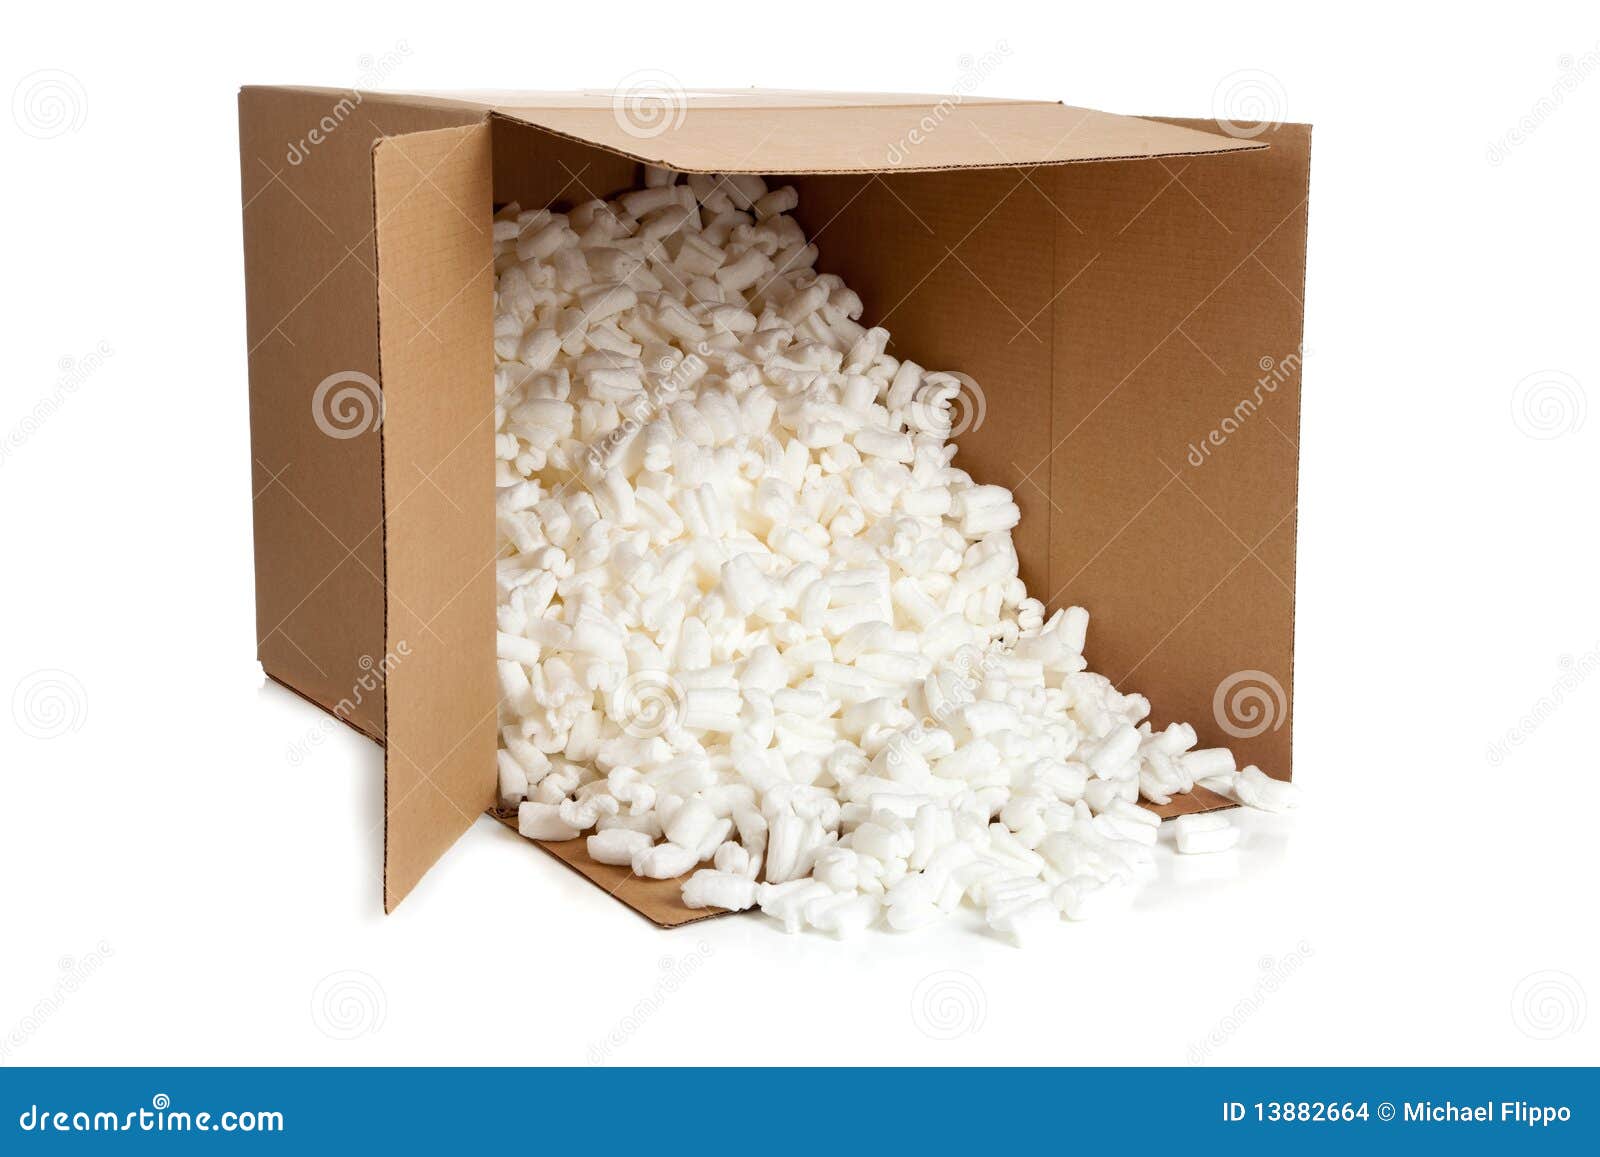 cardboard box with styrofoam on white